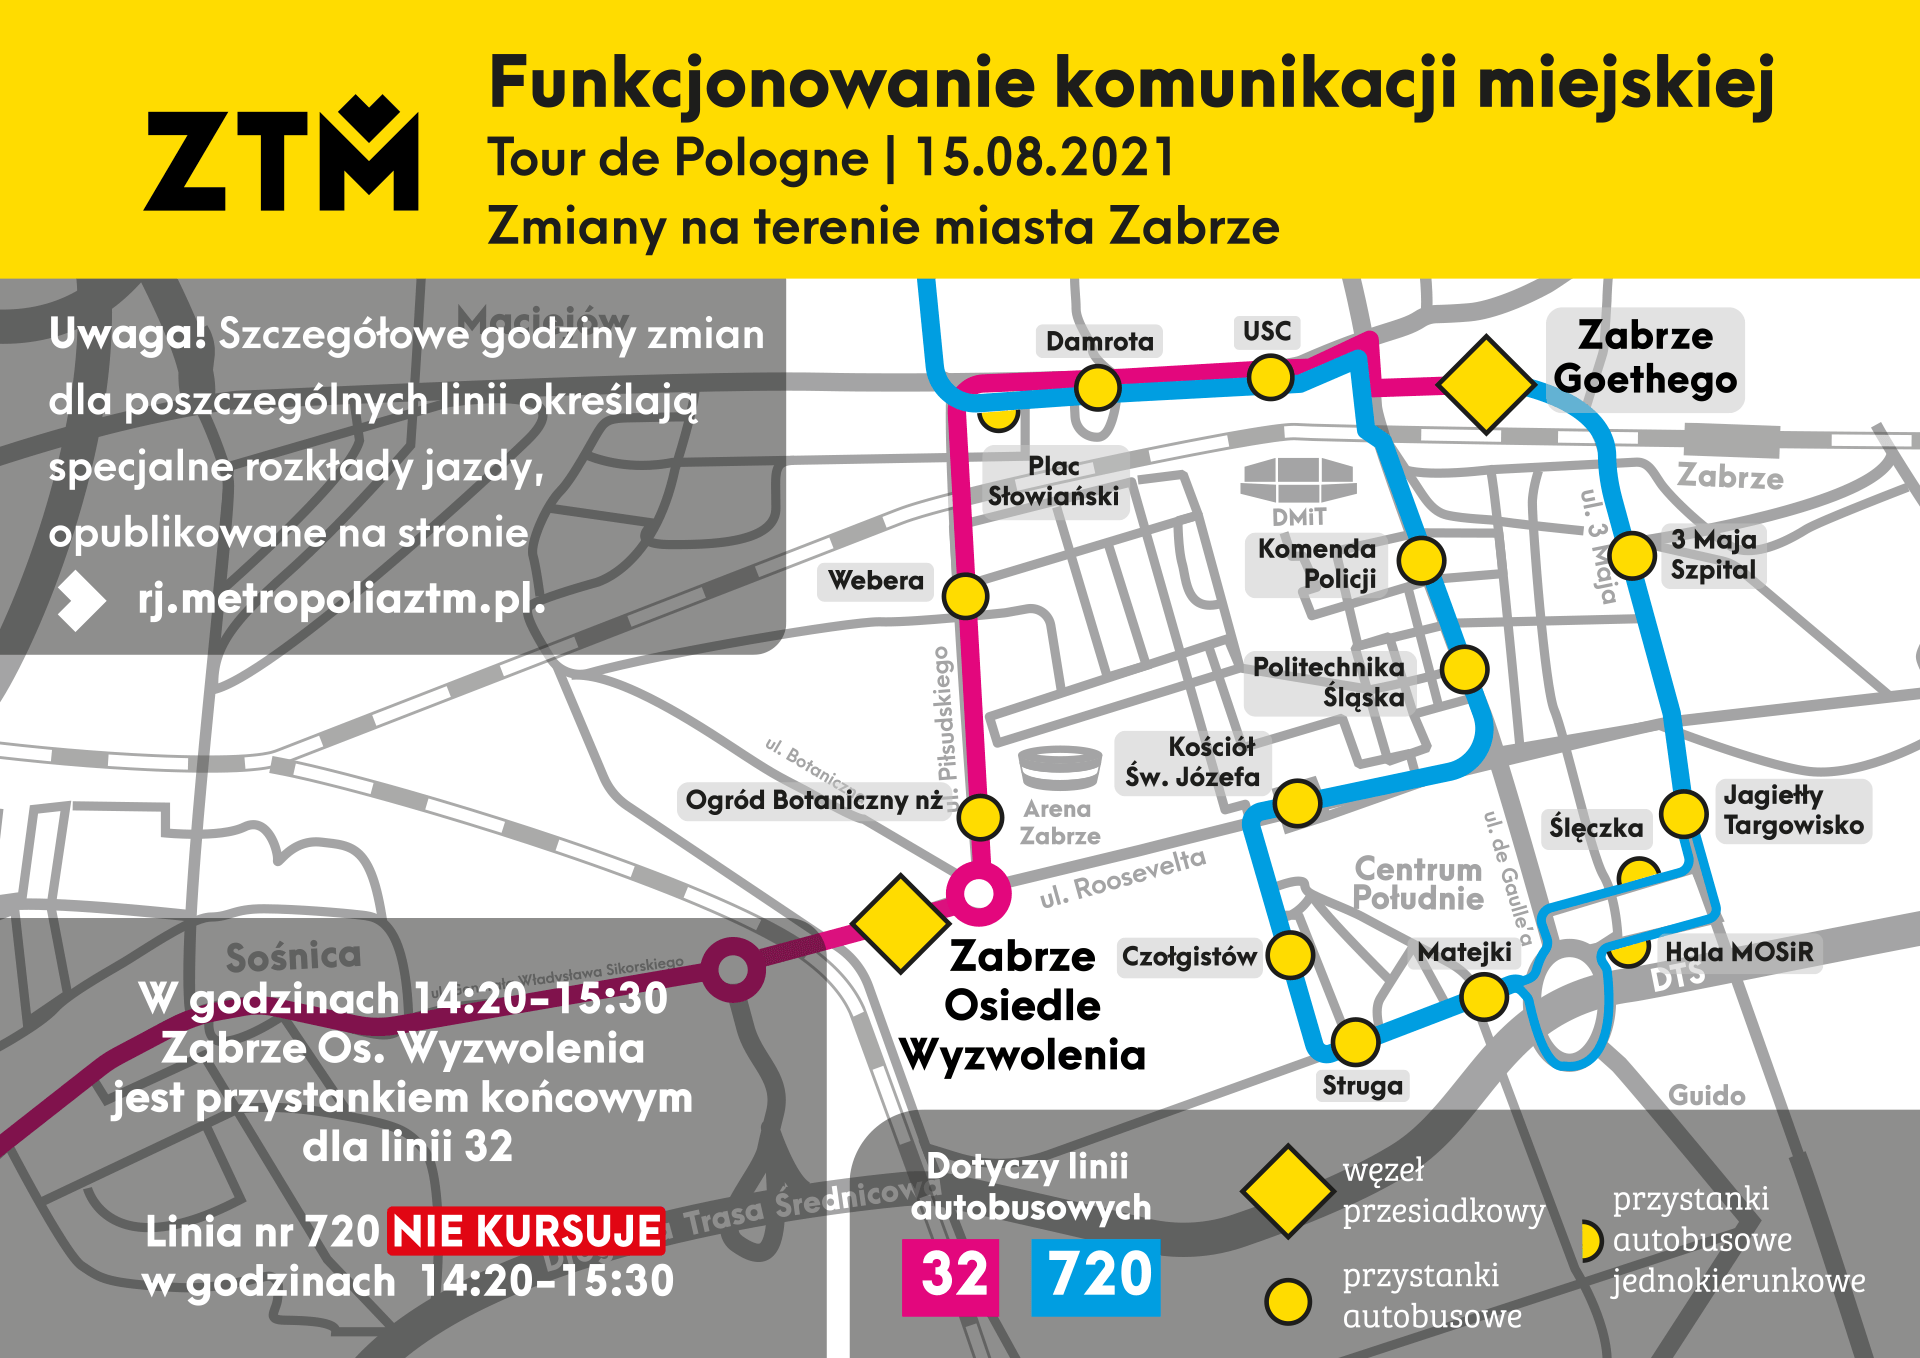 ZTM Tour de Pologne Mapy objazdowe Zabrze